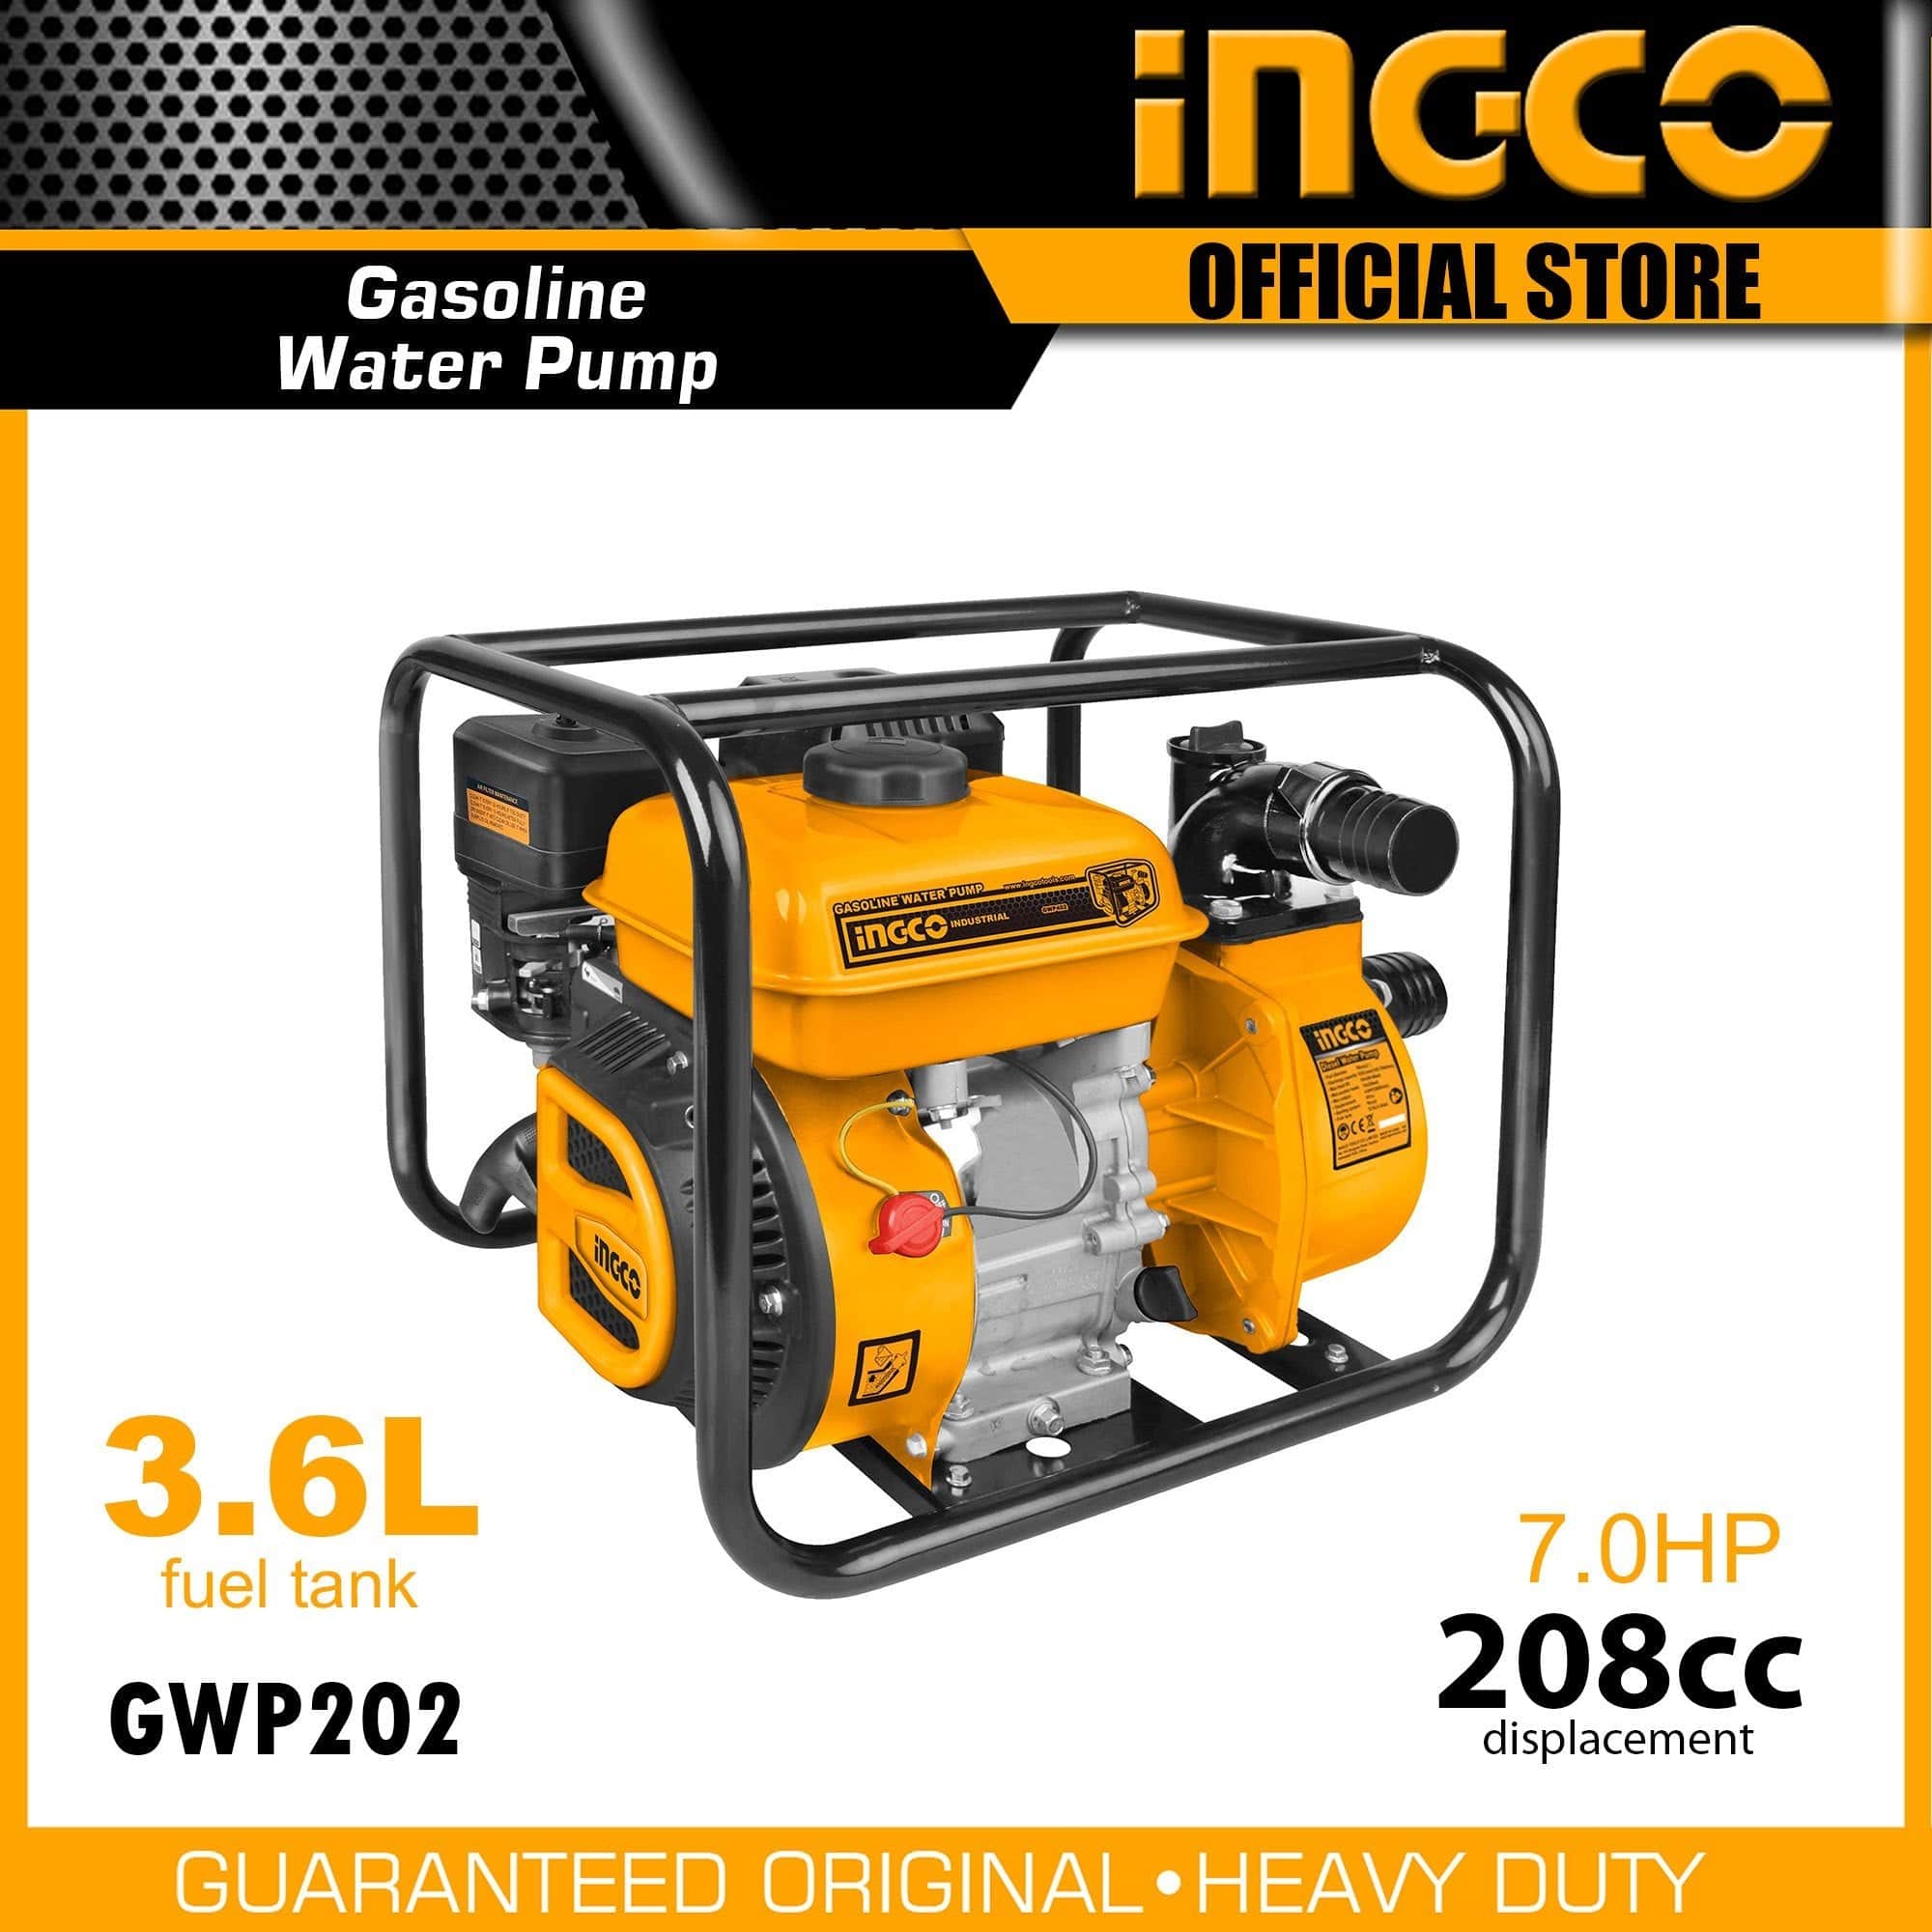 Ingco 2" Gasoline Water Pump - GWP202 | Supply Master | Accra, Ghana Gasoline Water Pump Buy Tools hardware Building materials